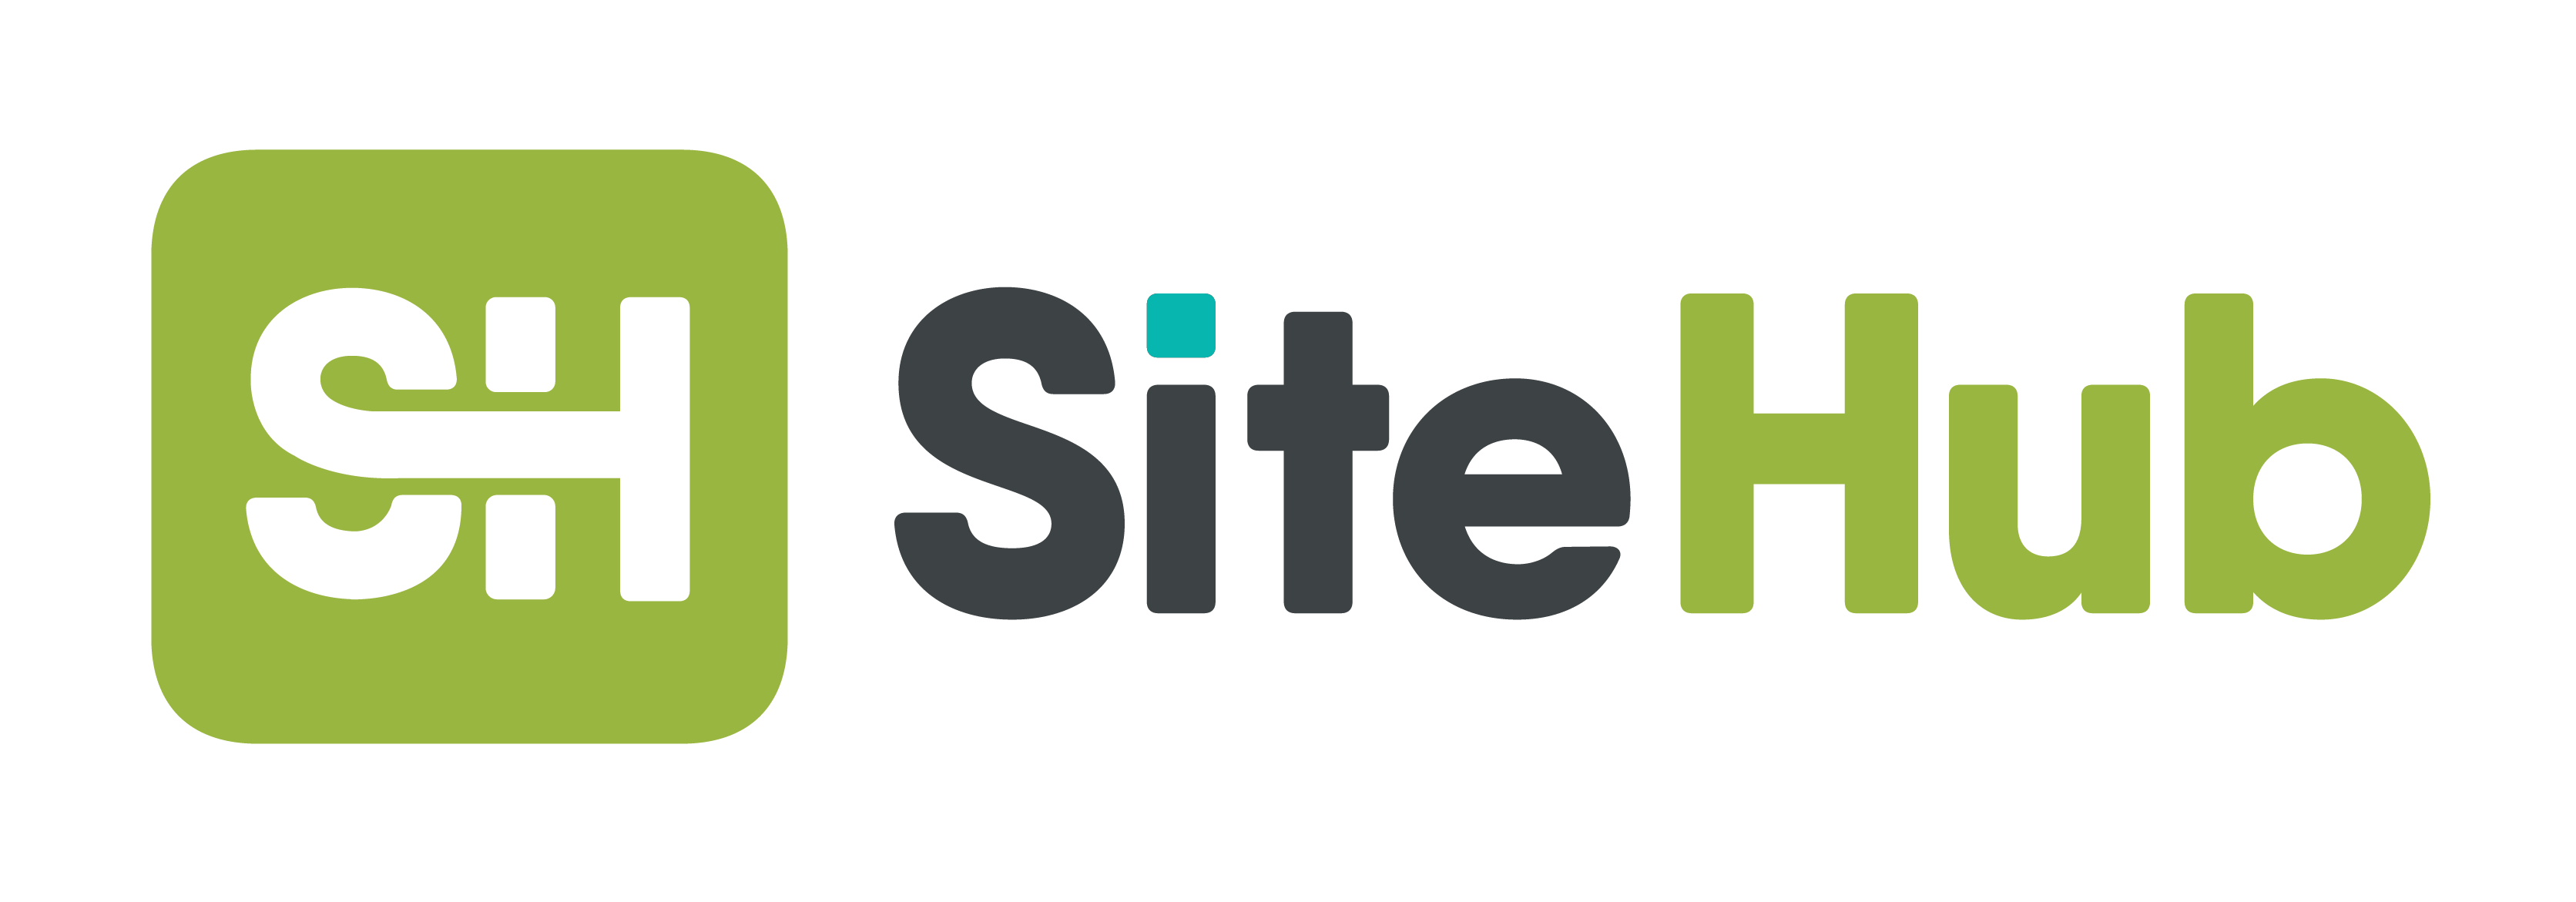 Site Hub Logo